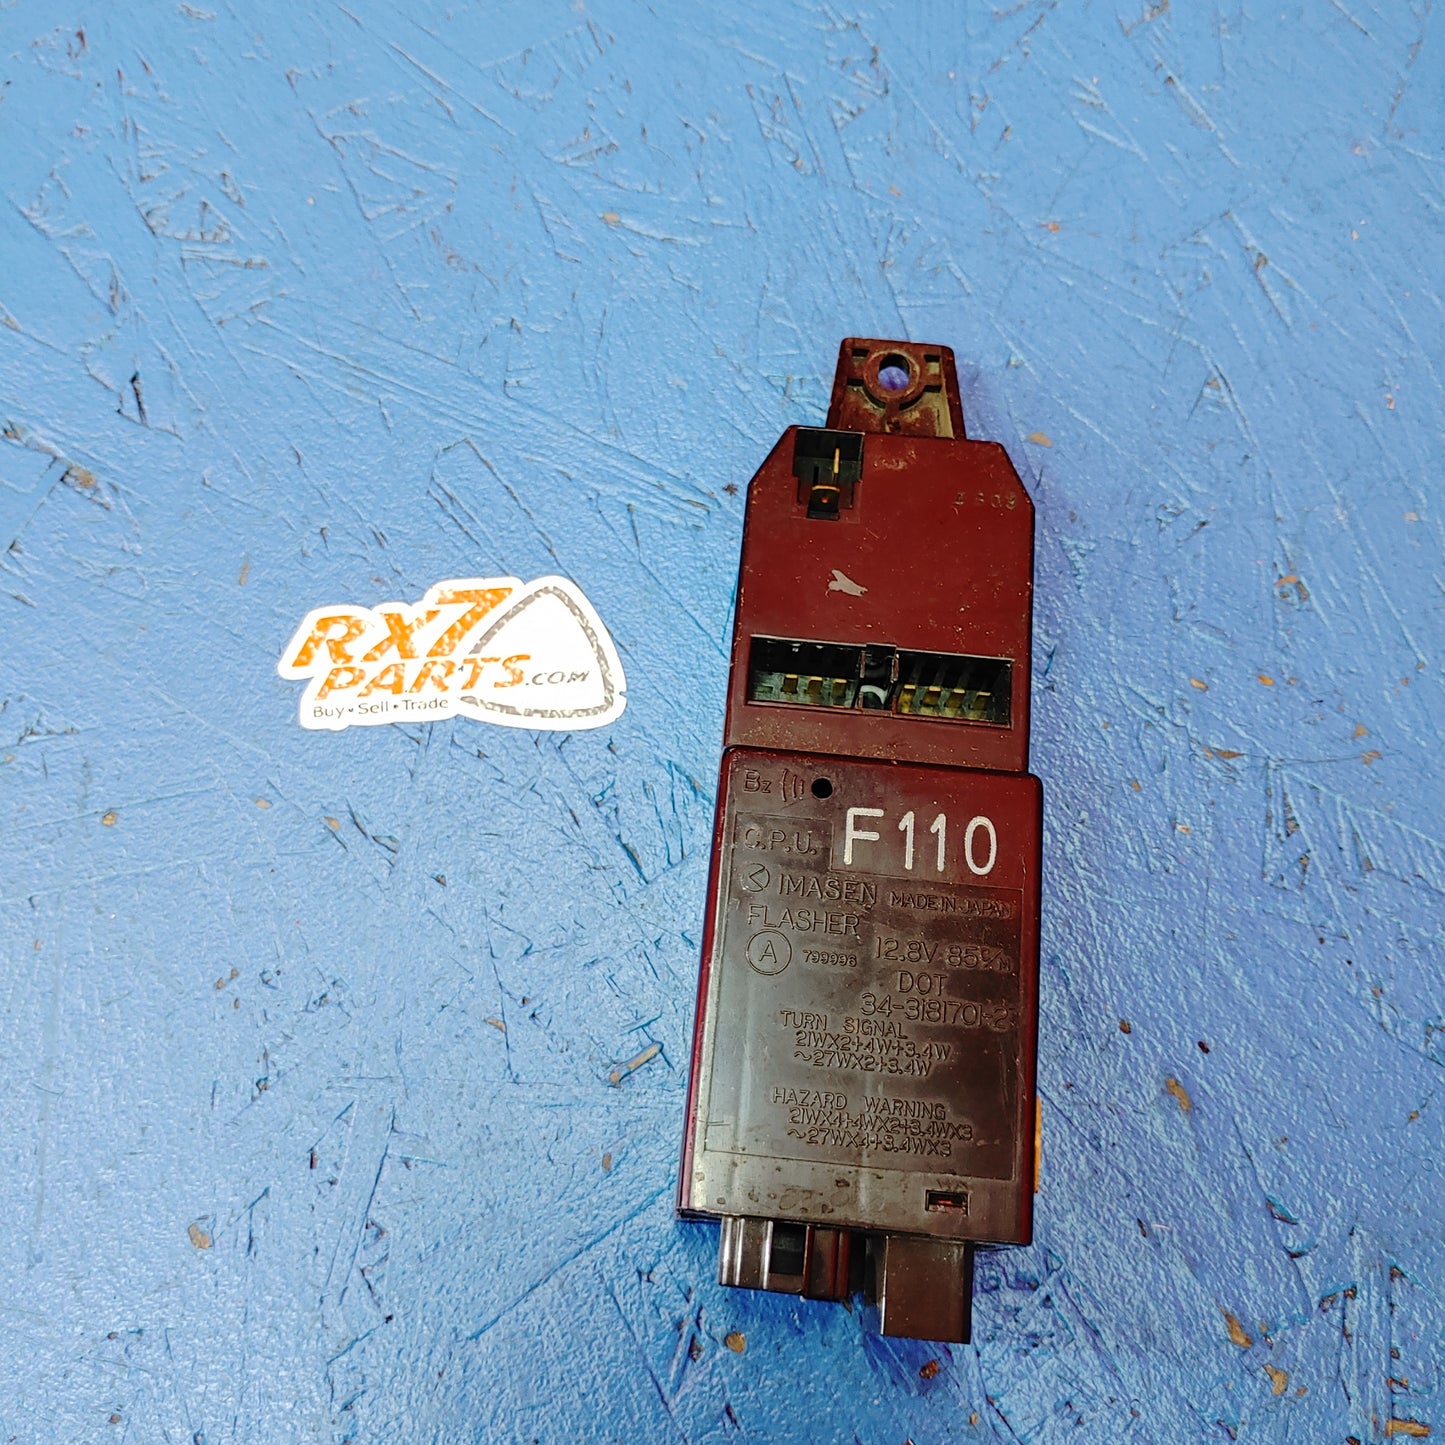 RHD Flasher CPU F110 RX7 FD FD3S 93 - 02 Mazda S4B36/10